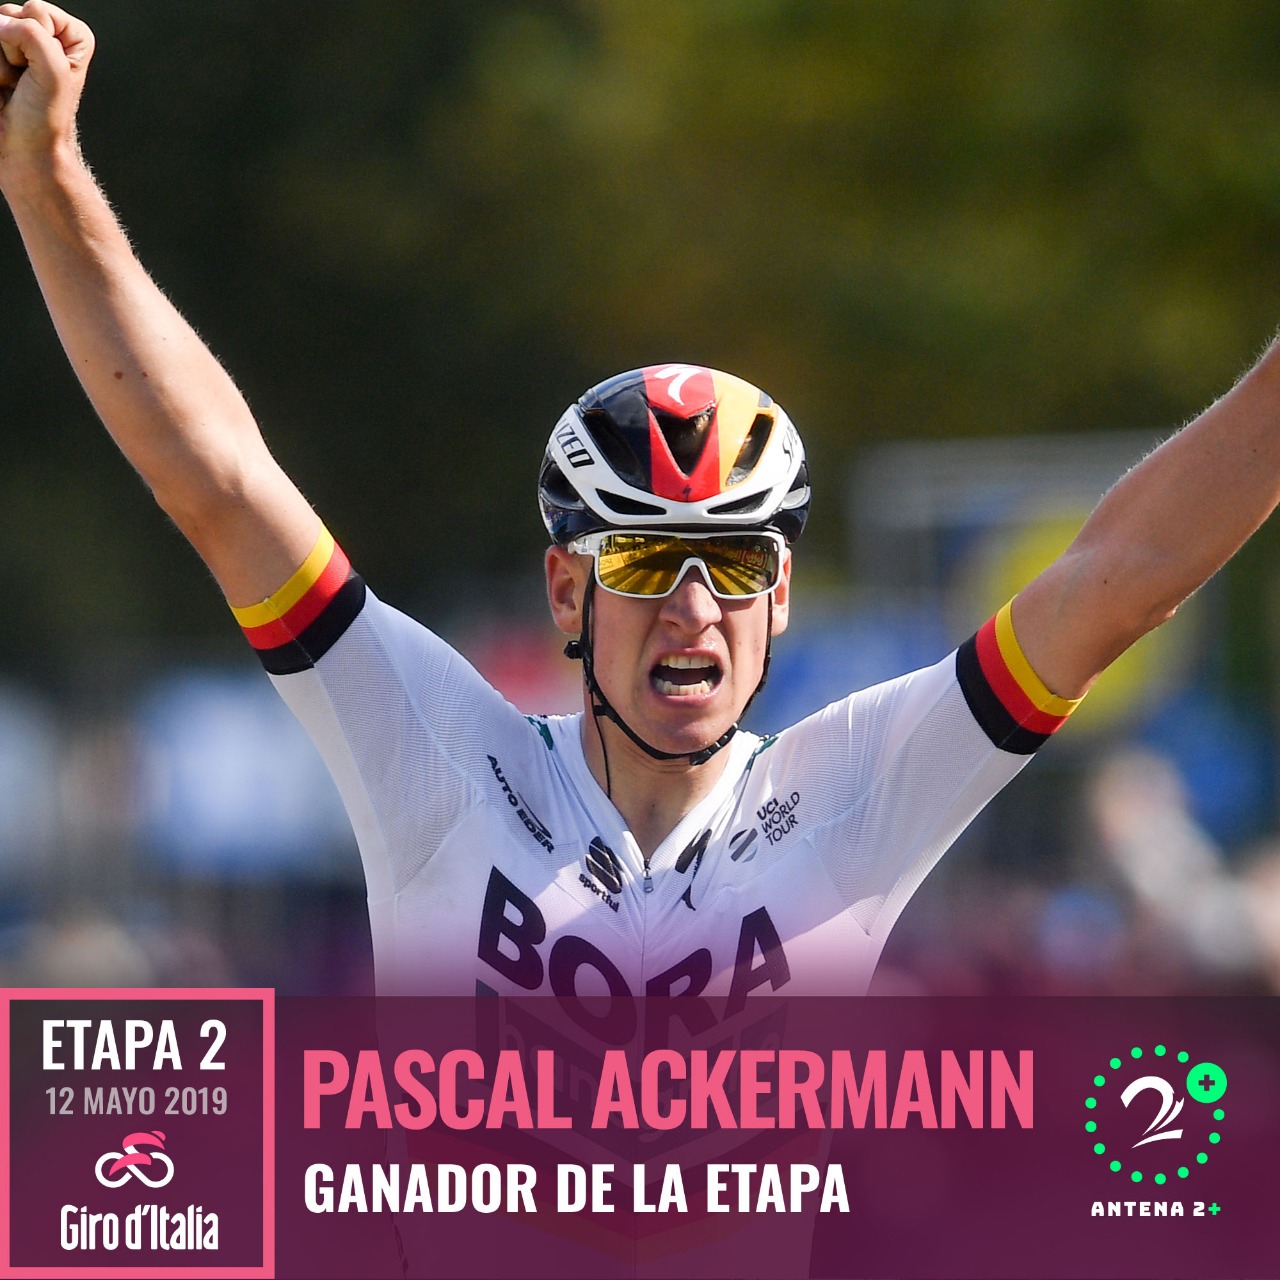 Pasckall Ackermann, Giro de Italia, 2019